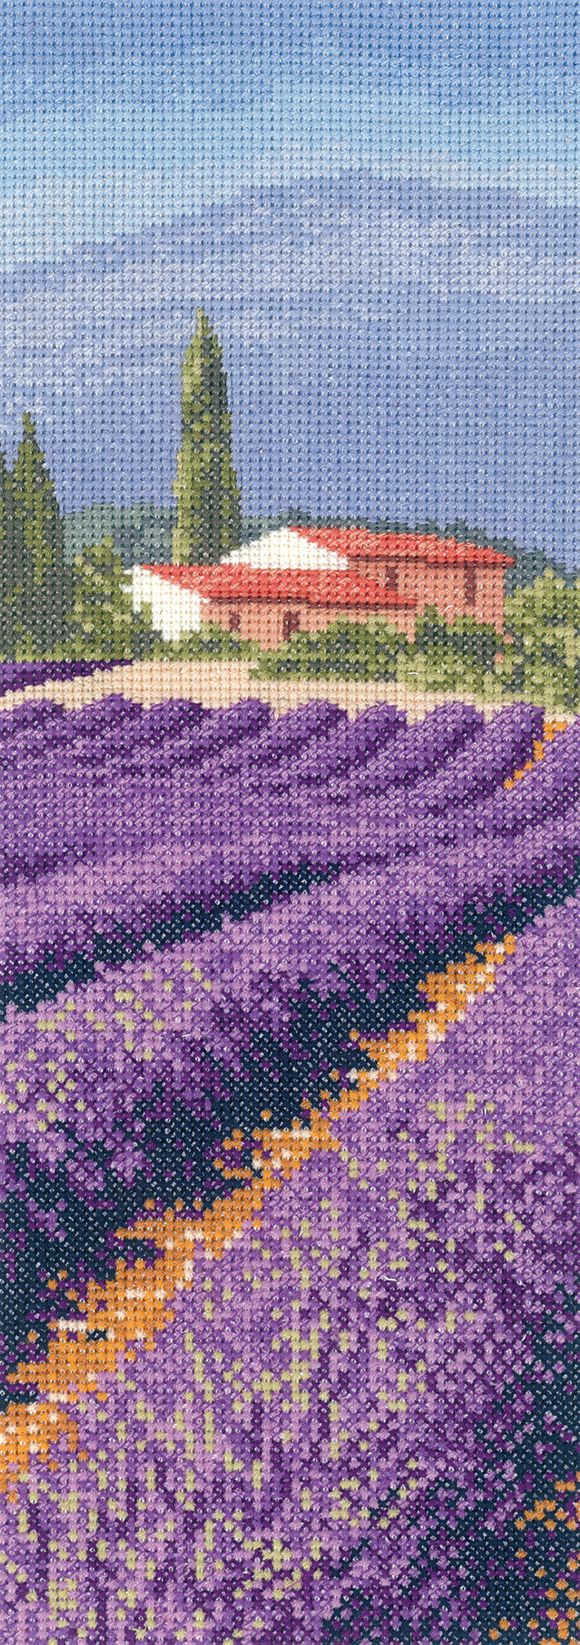 Lavender Fields - Provence - John Clayton Cross Stitch